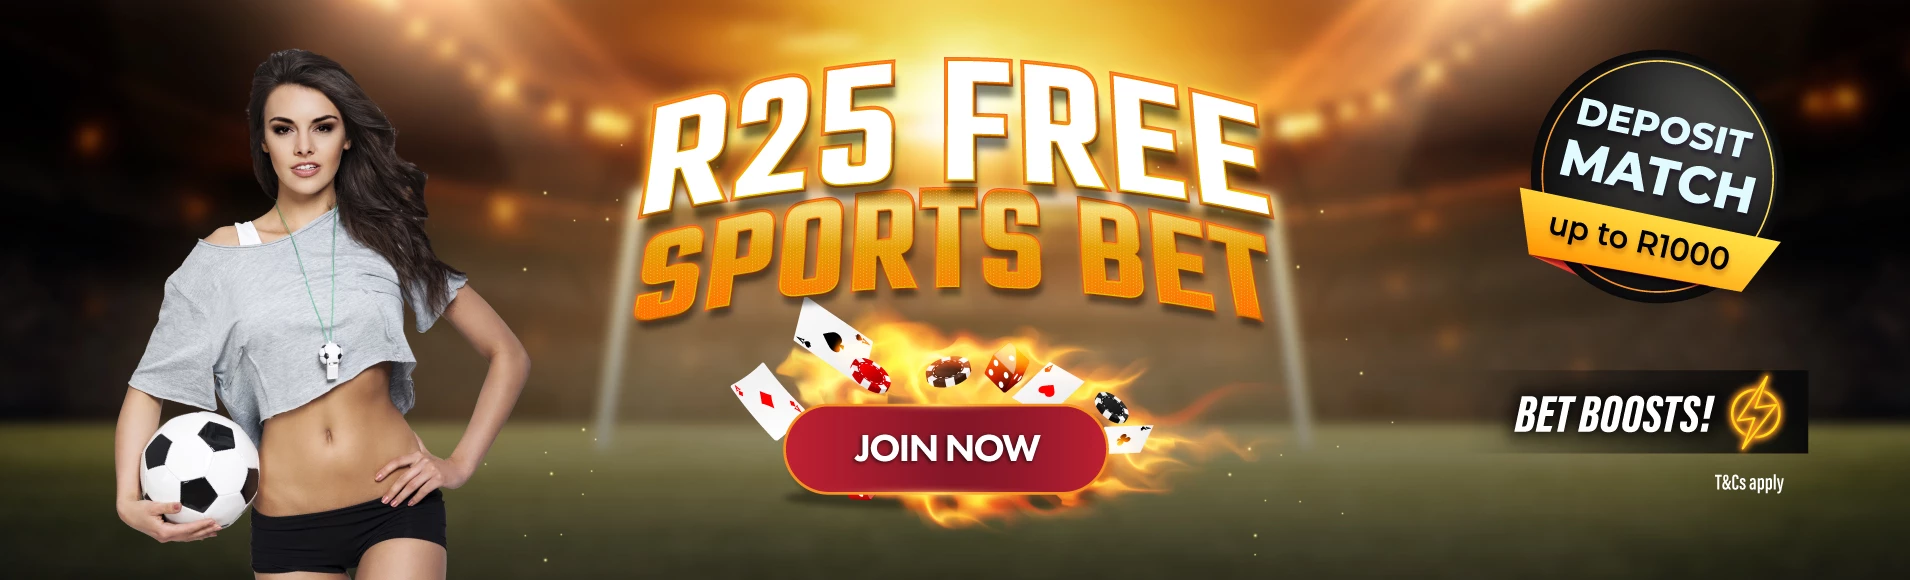 2177-r25-free-sports-betting-17180255312233.jpg